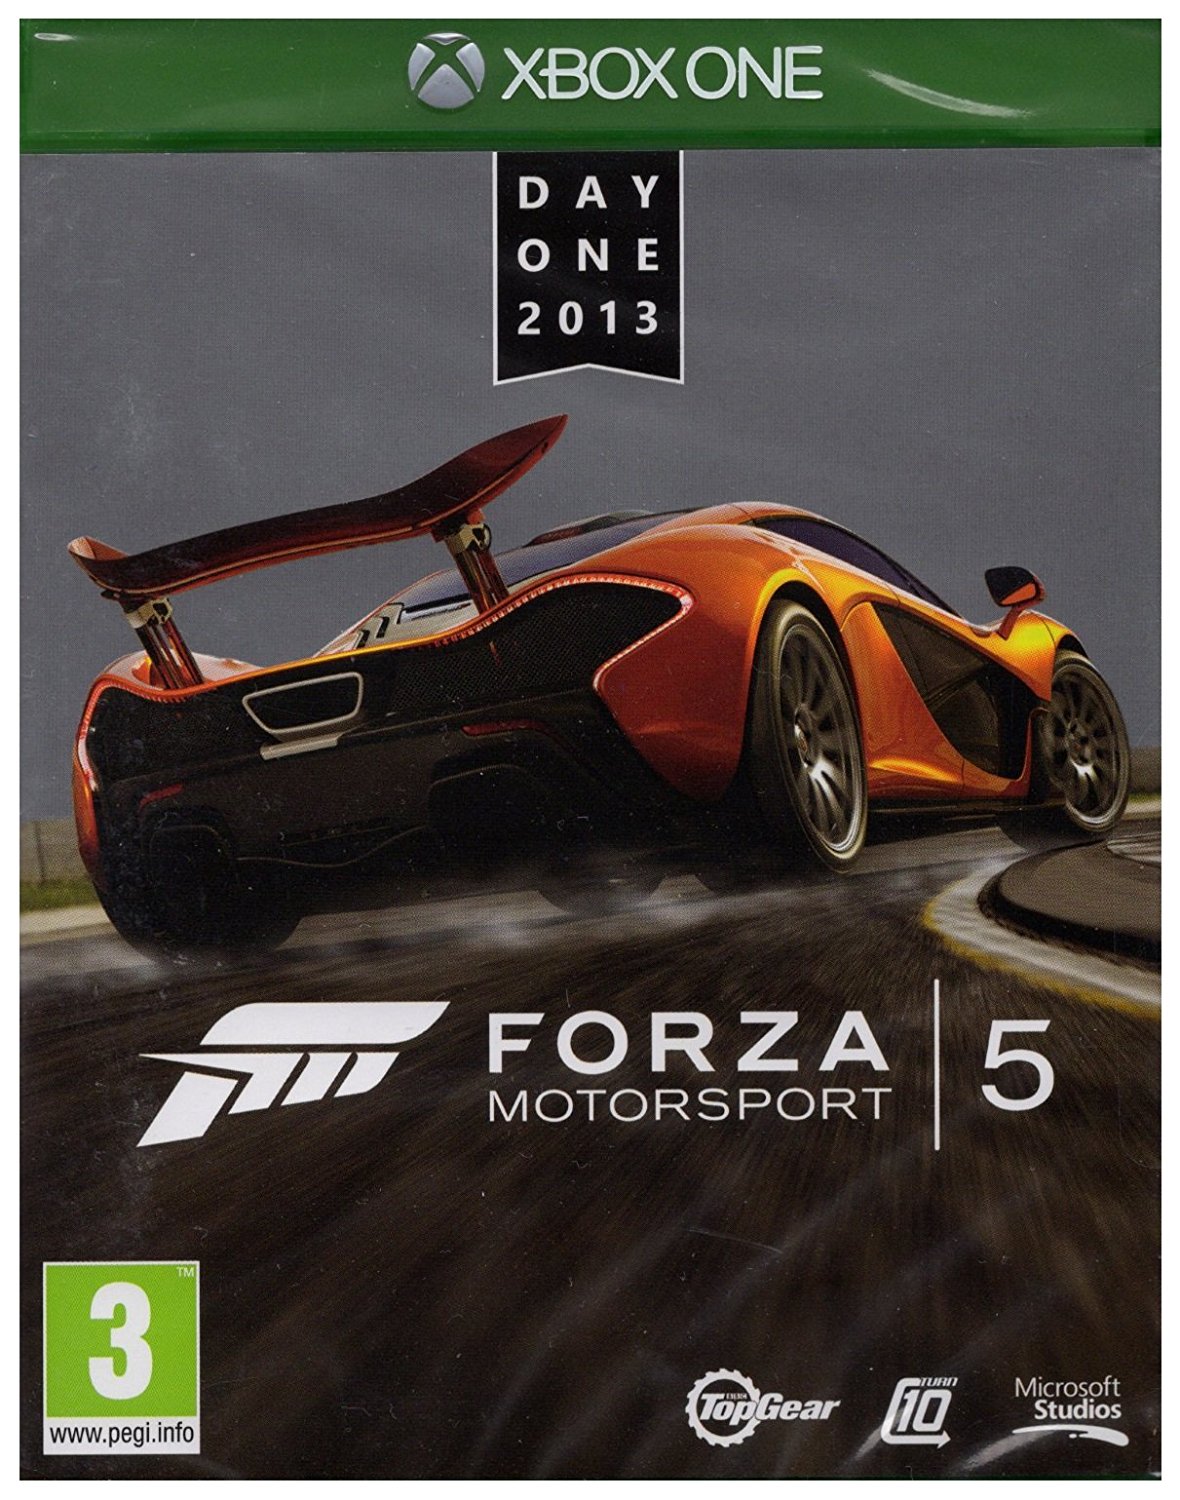 Forza 5 last game